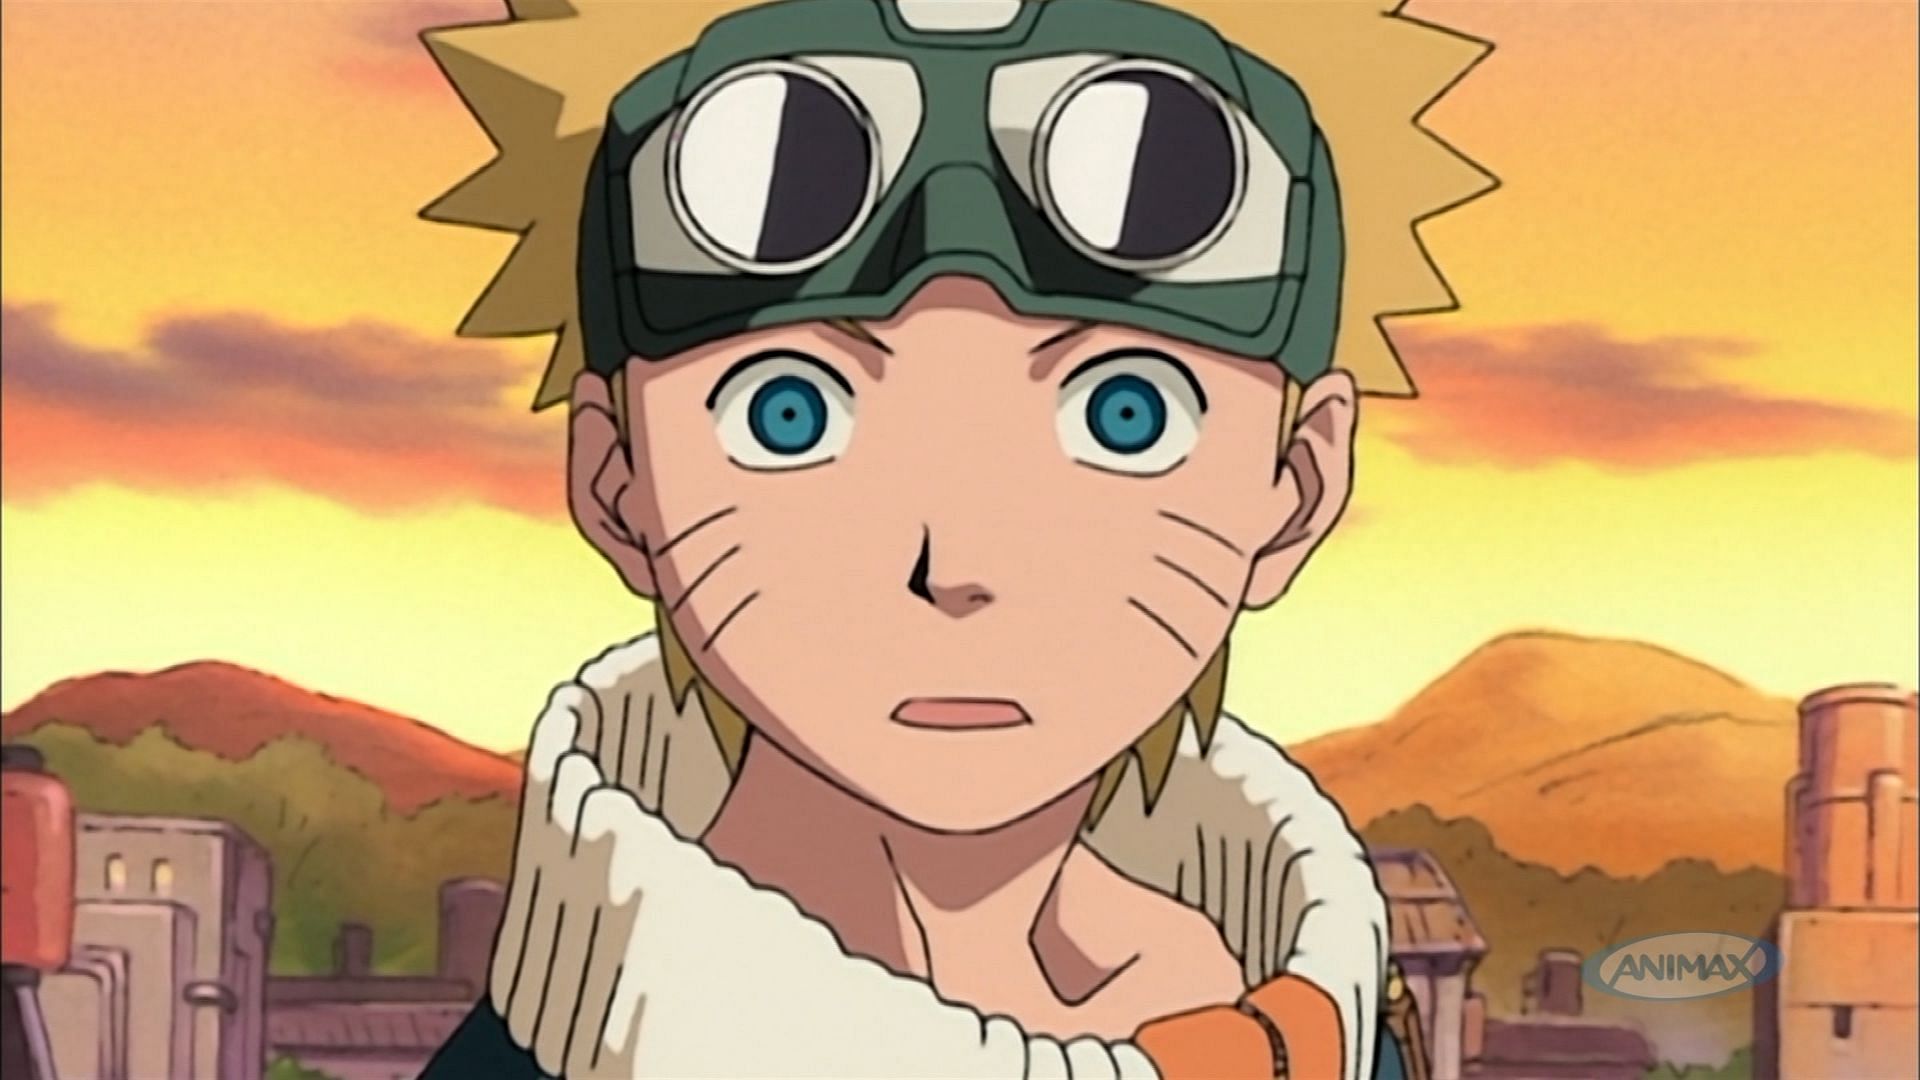 Naruto using his goggles (Image via Toei Animation)